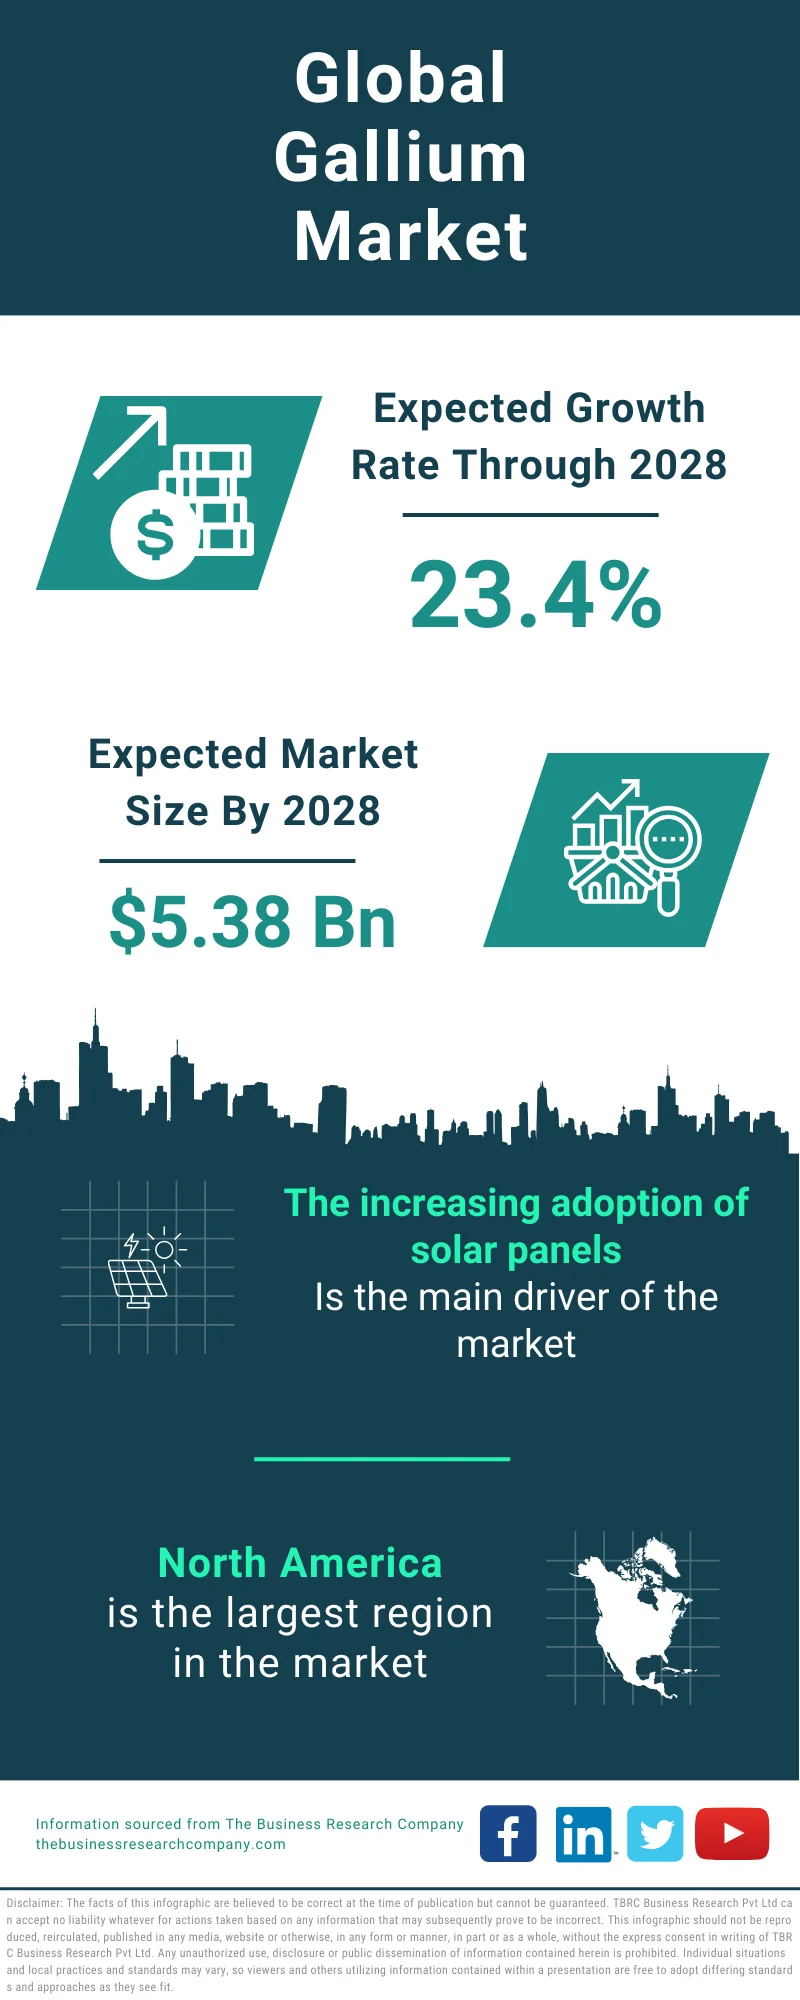 Gallium Global Market Report 2024 